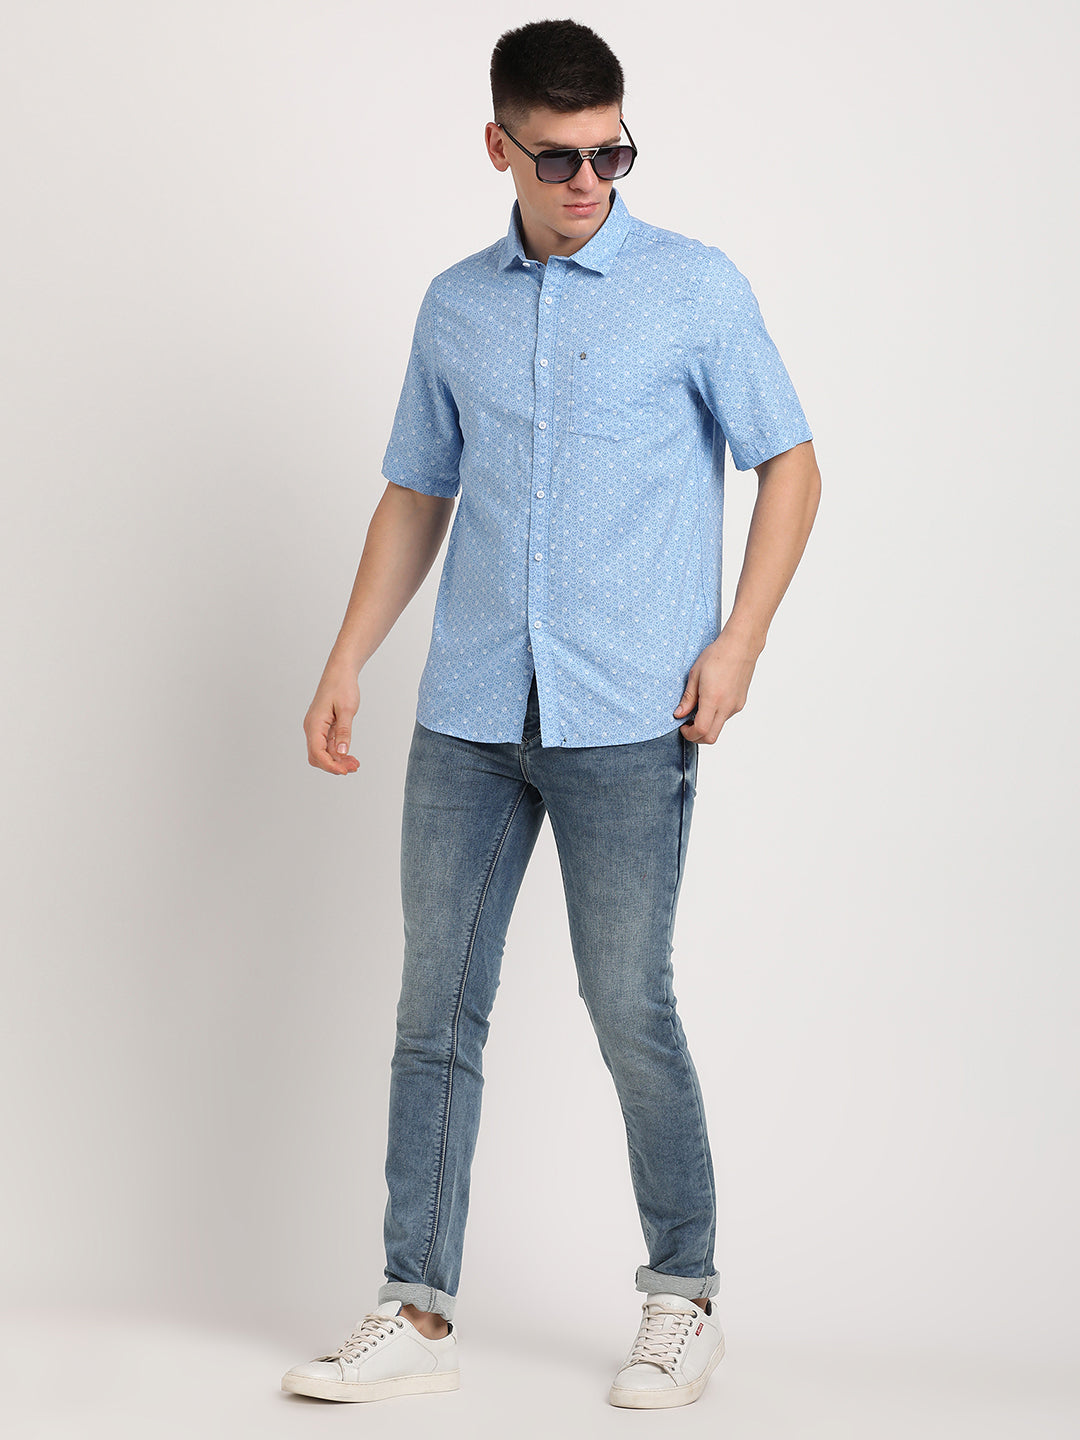 100% Cotton Sky Blue Printed Slim Fit Half Sleeve Casual Shirt